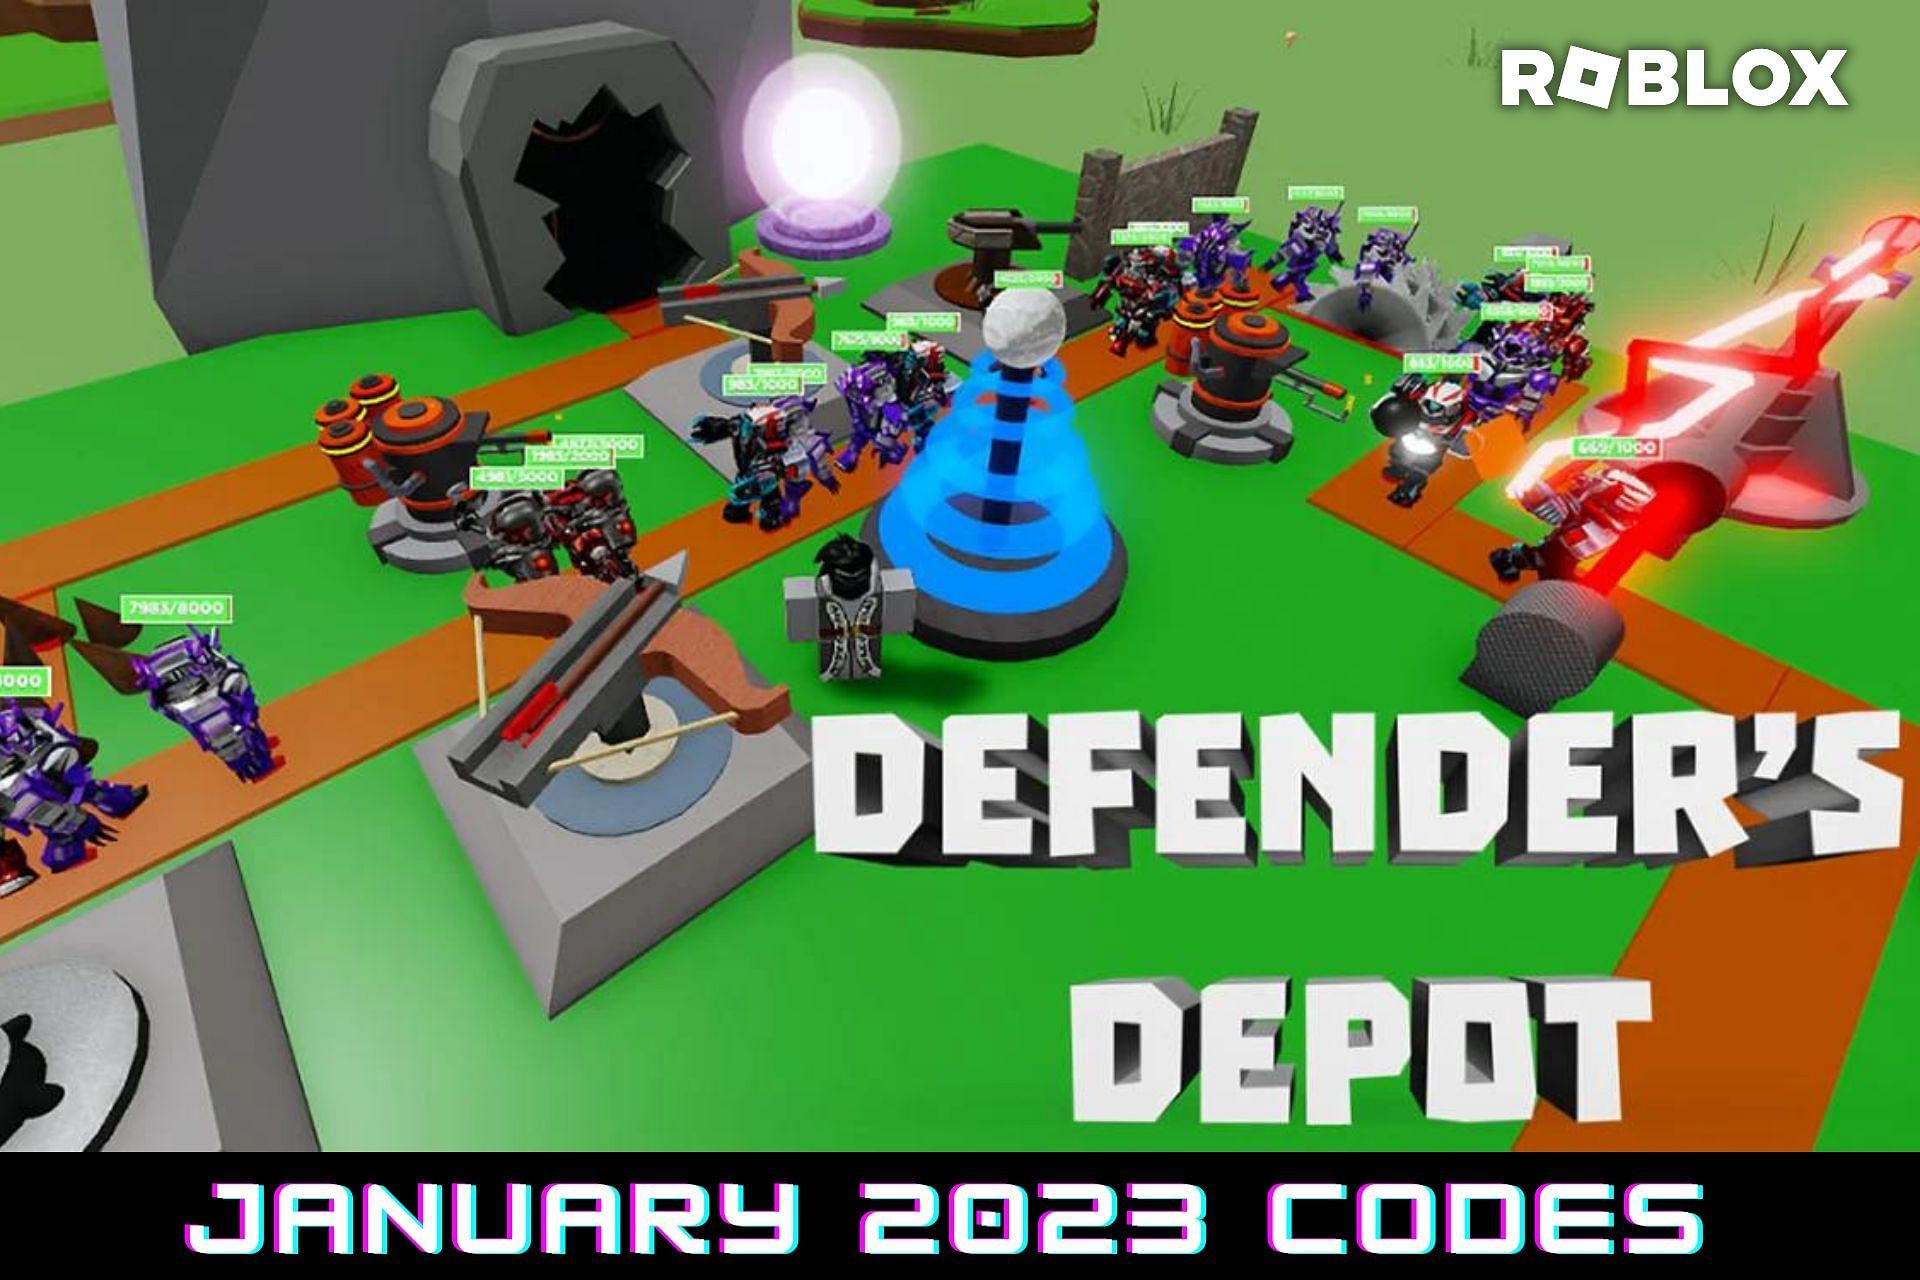 Roblox Defenders Depot Gameplay